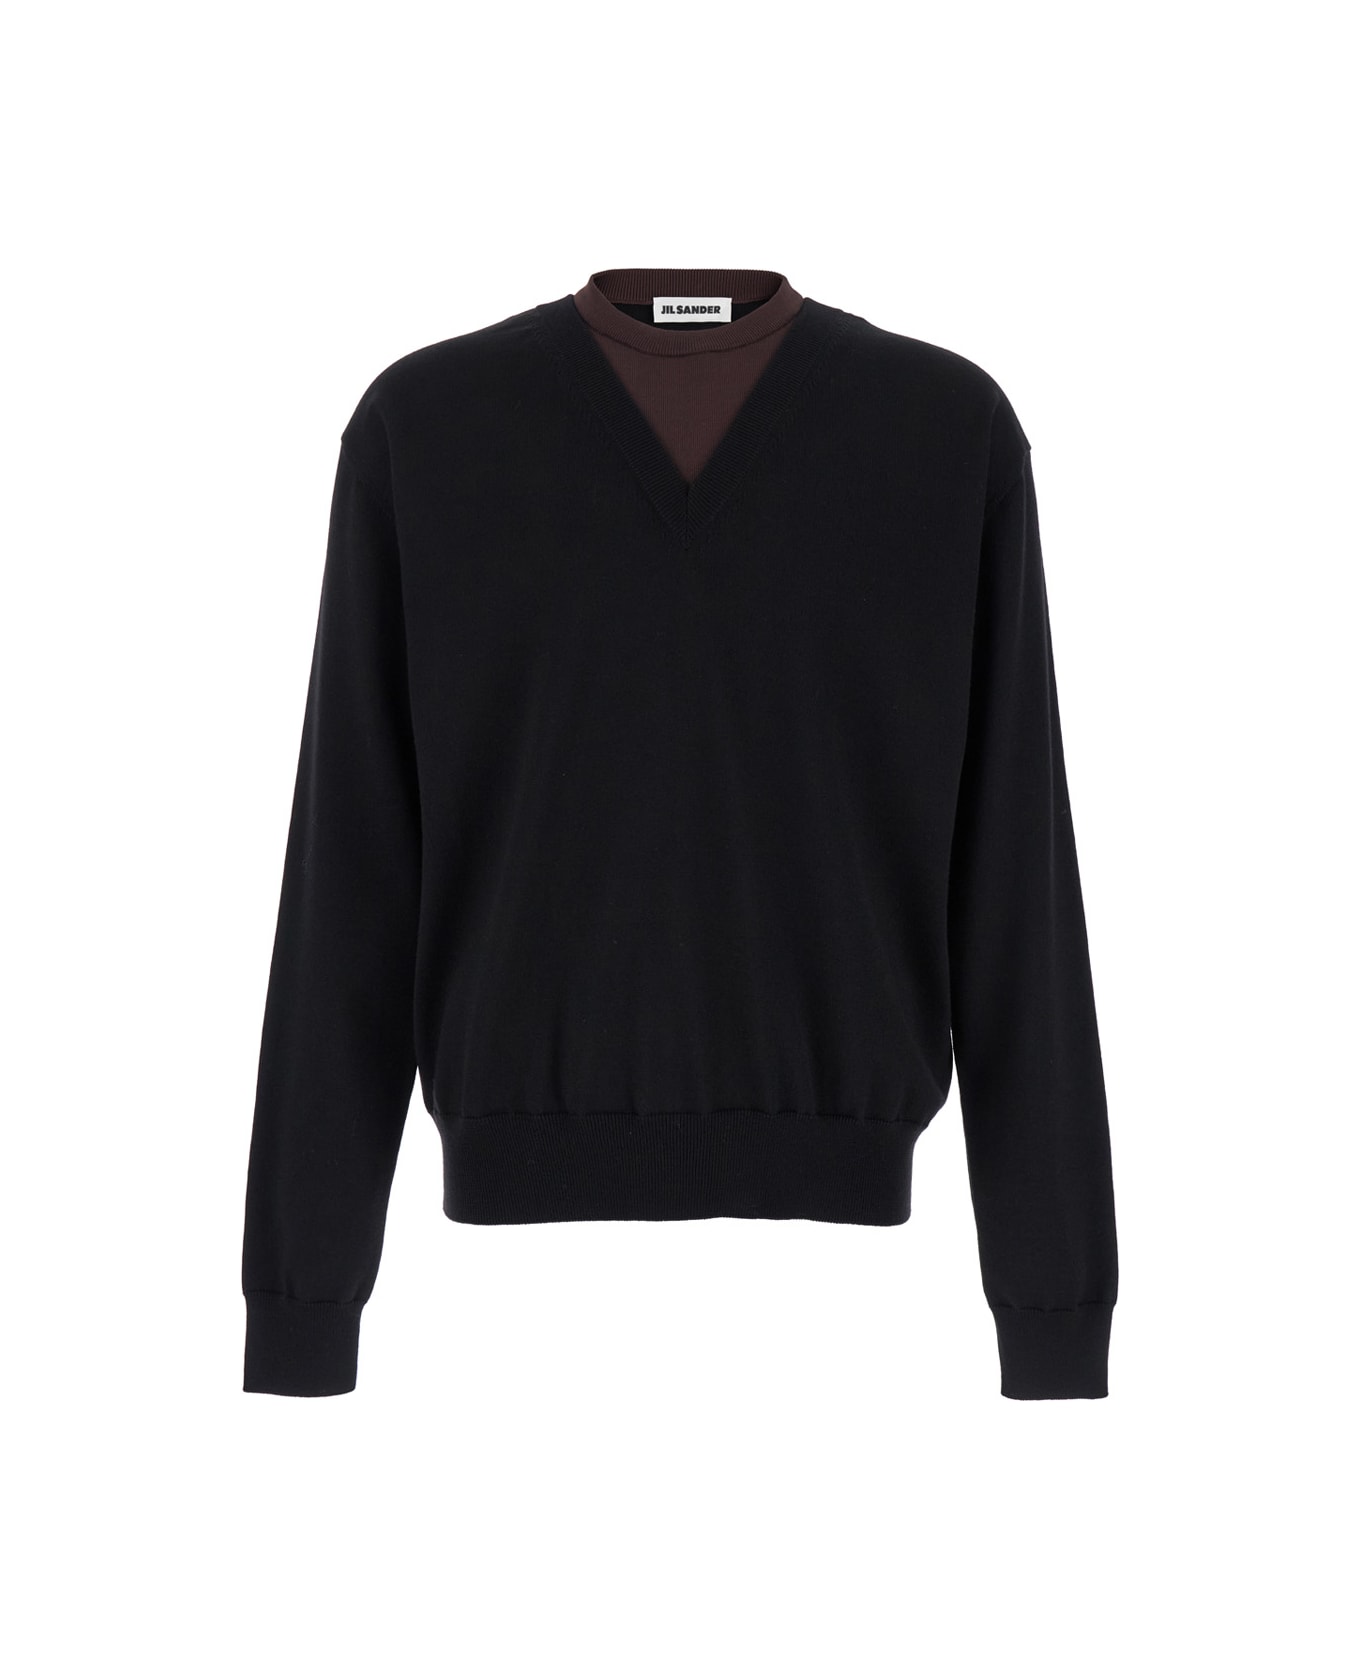 Jil Sander Black And Brown Double-neck Sweater In Wool Man - Black ニットウェア